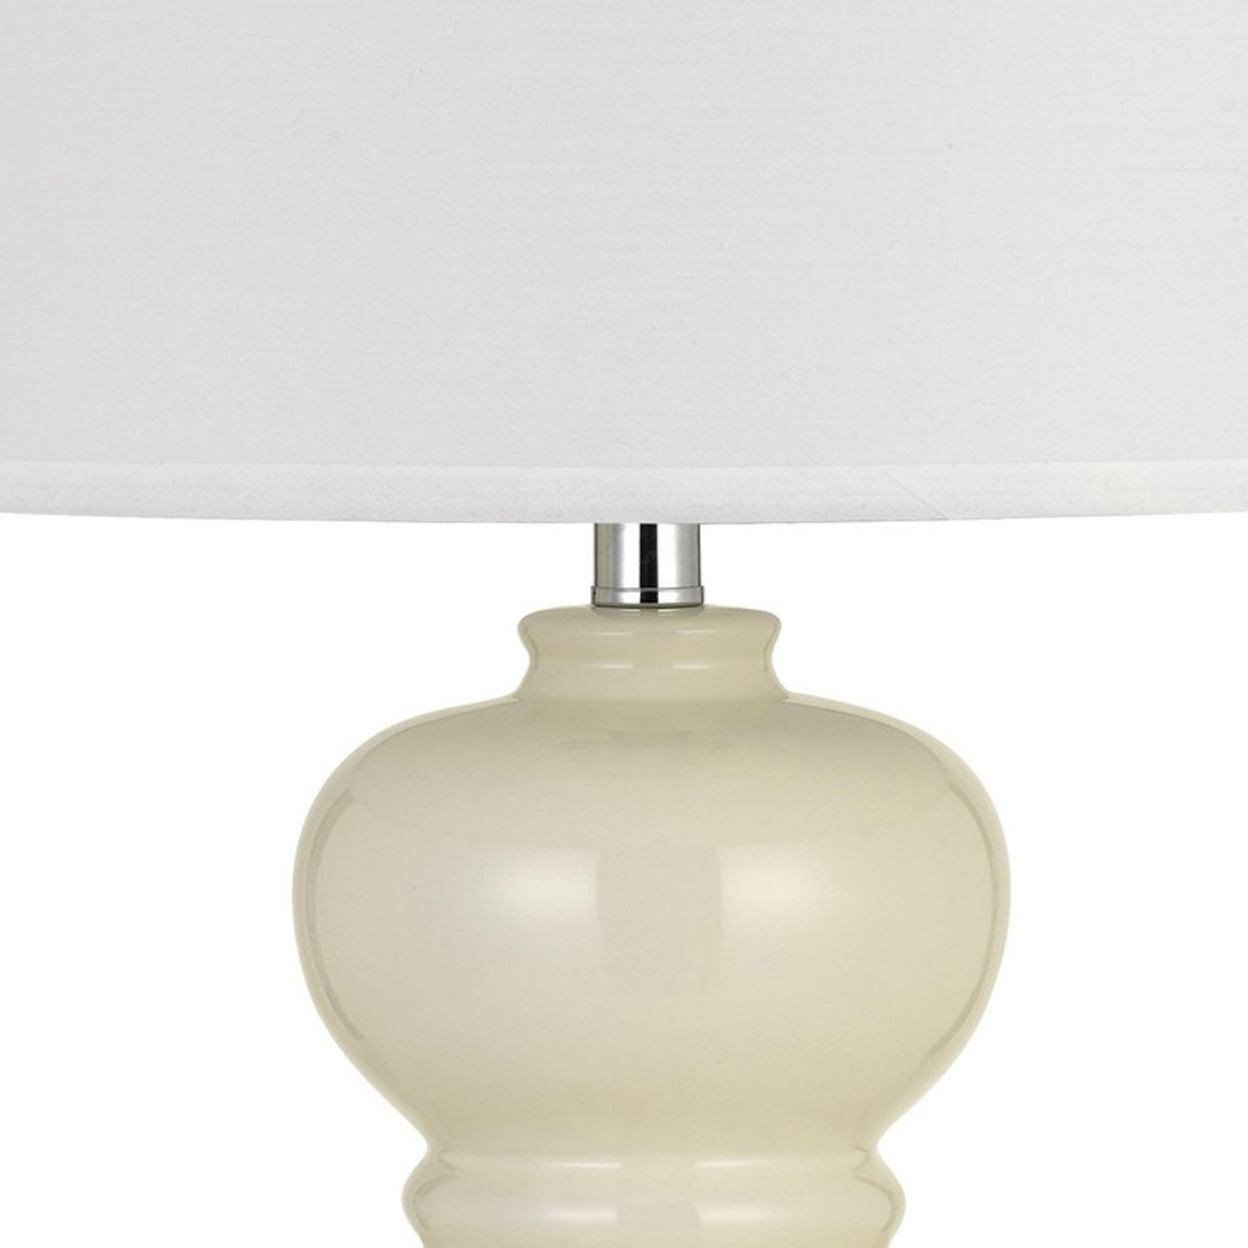 27 Ceramic Table Lamp With Hardback Style Shade, White And Silver- Saltoro Sherpi